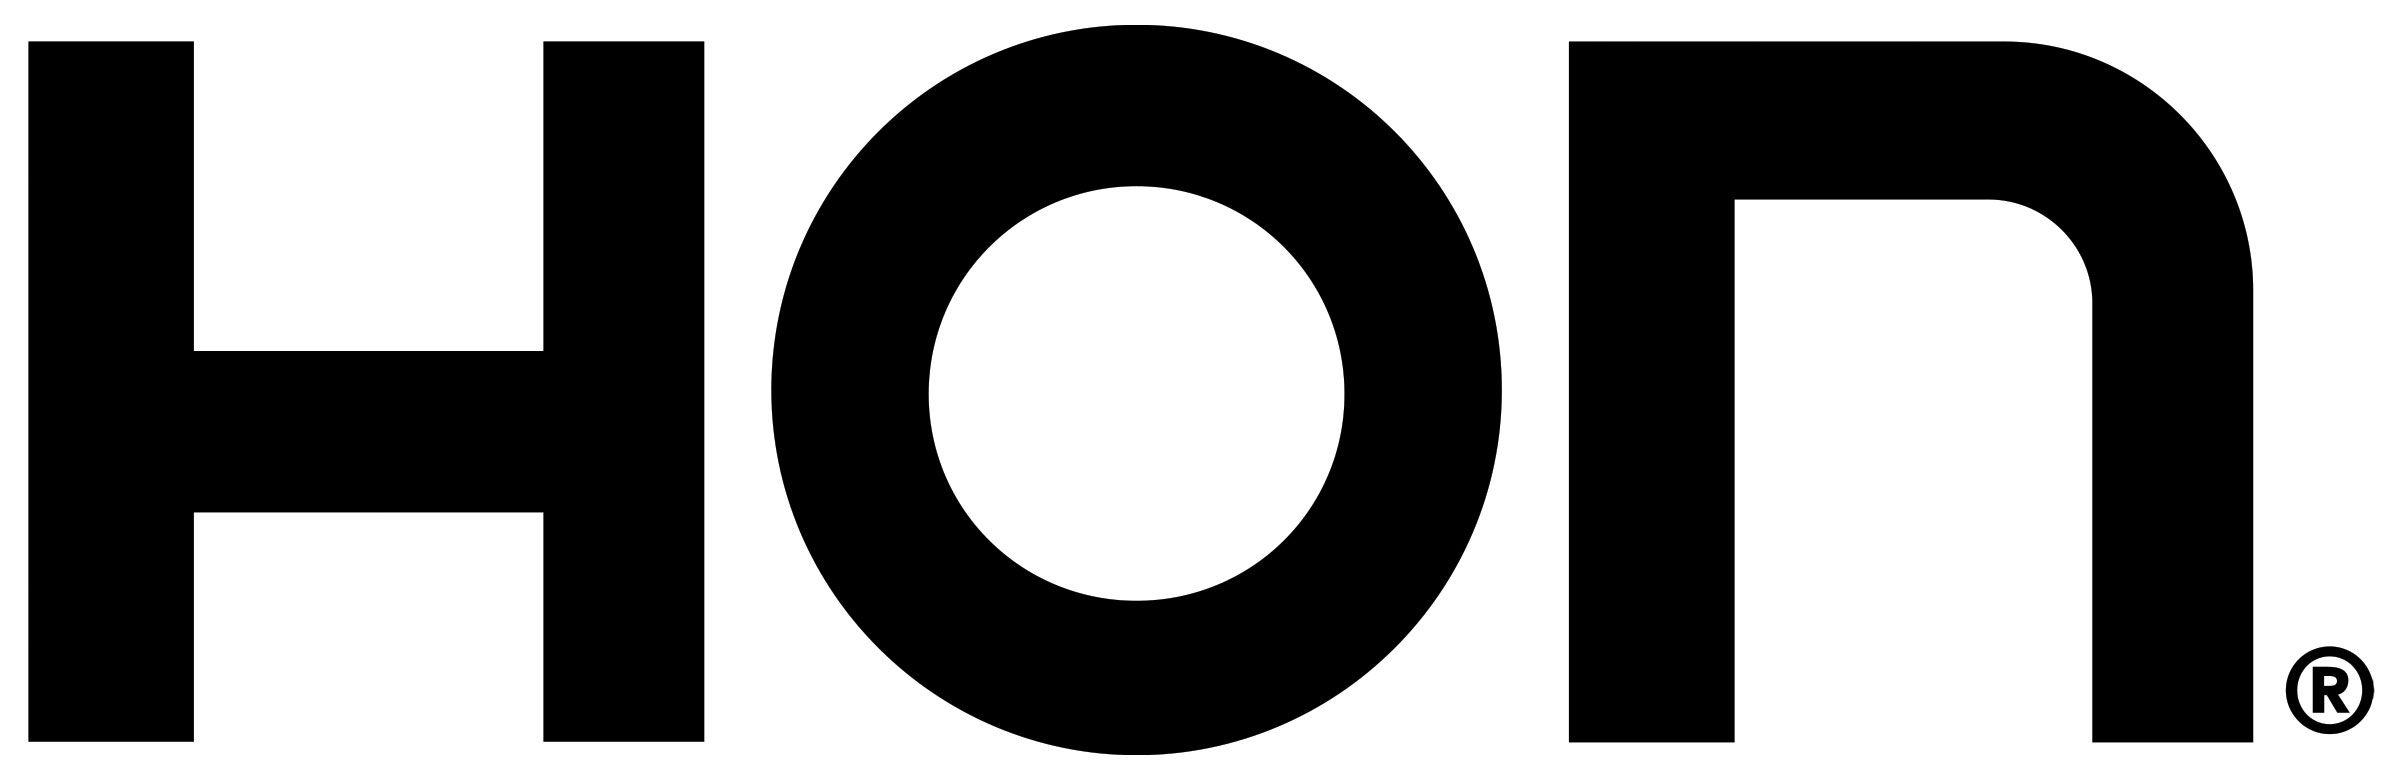 Hon Logo - Ball Office Products HON Logo Black (3) - Ball Office Products